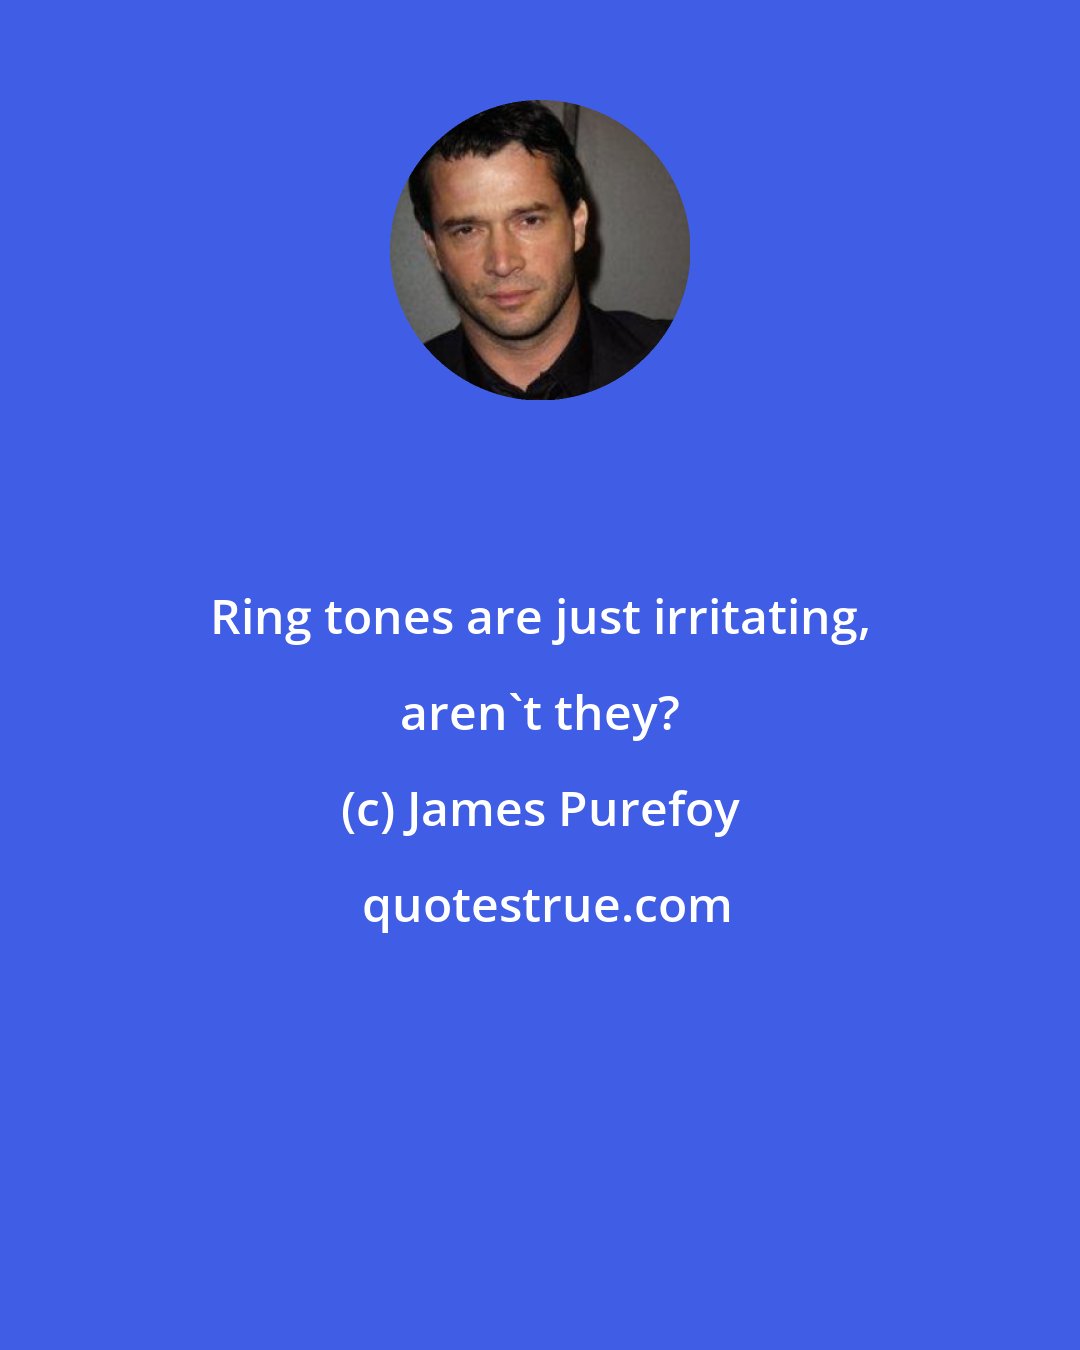 James Purefoy: Ring tones are just irritating, aren't they?